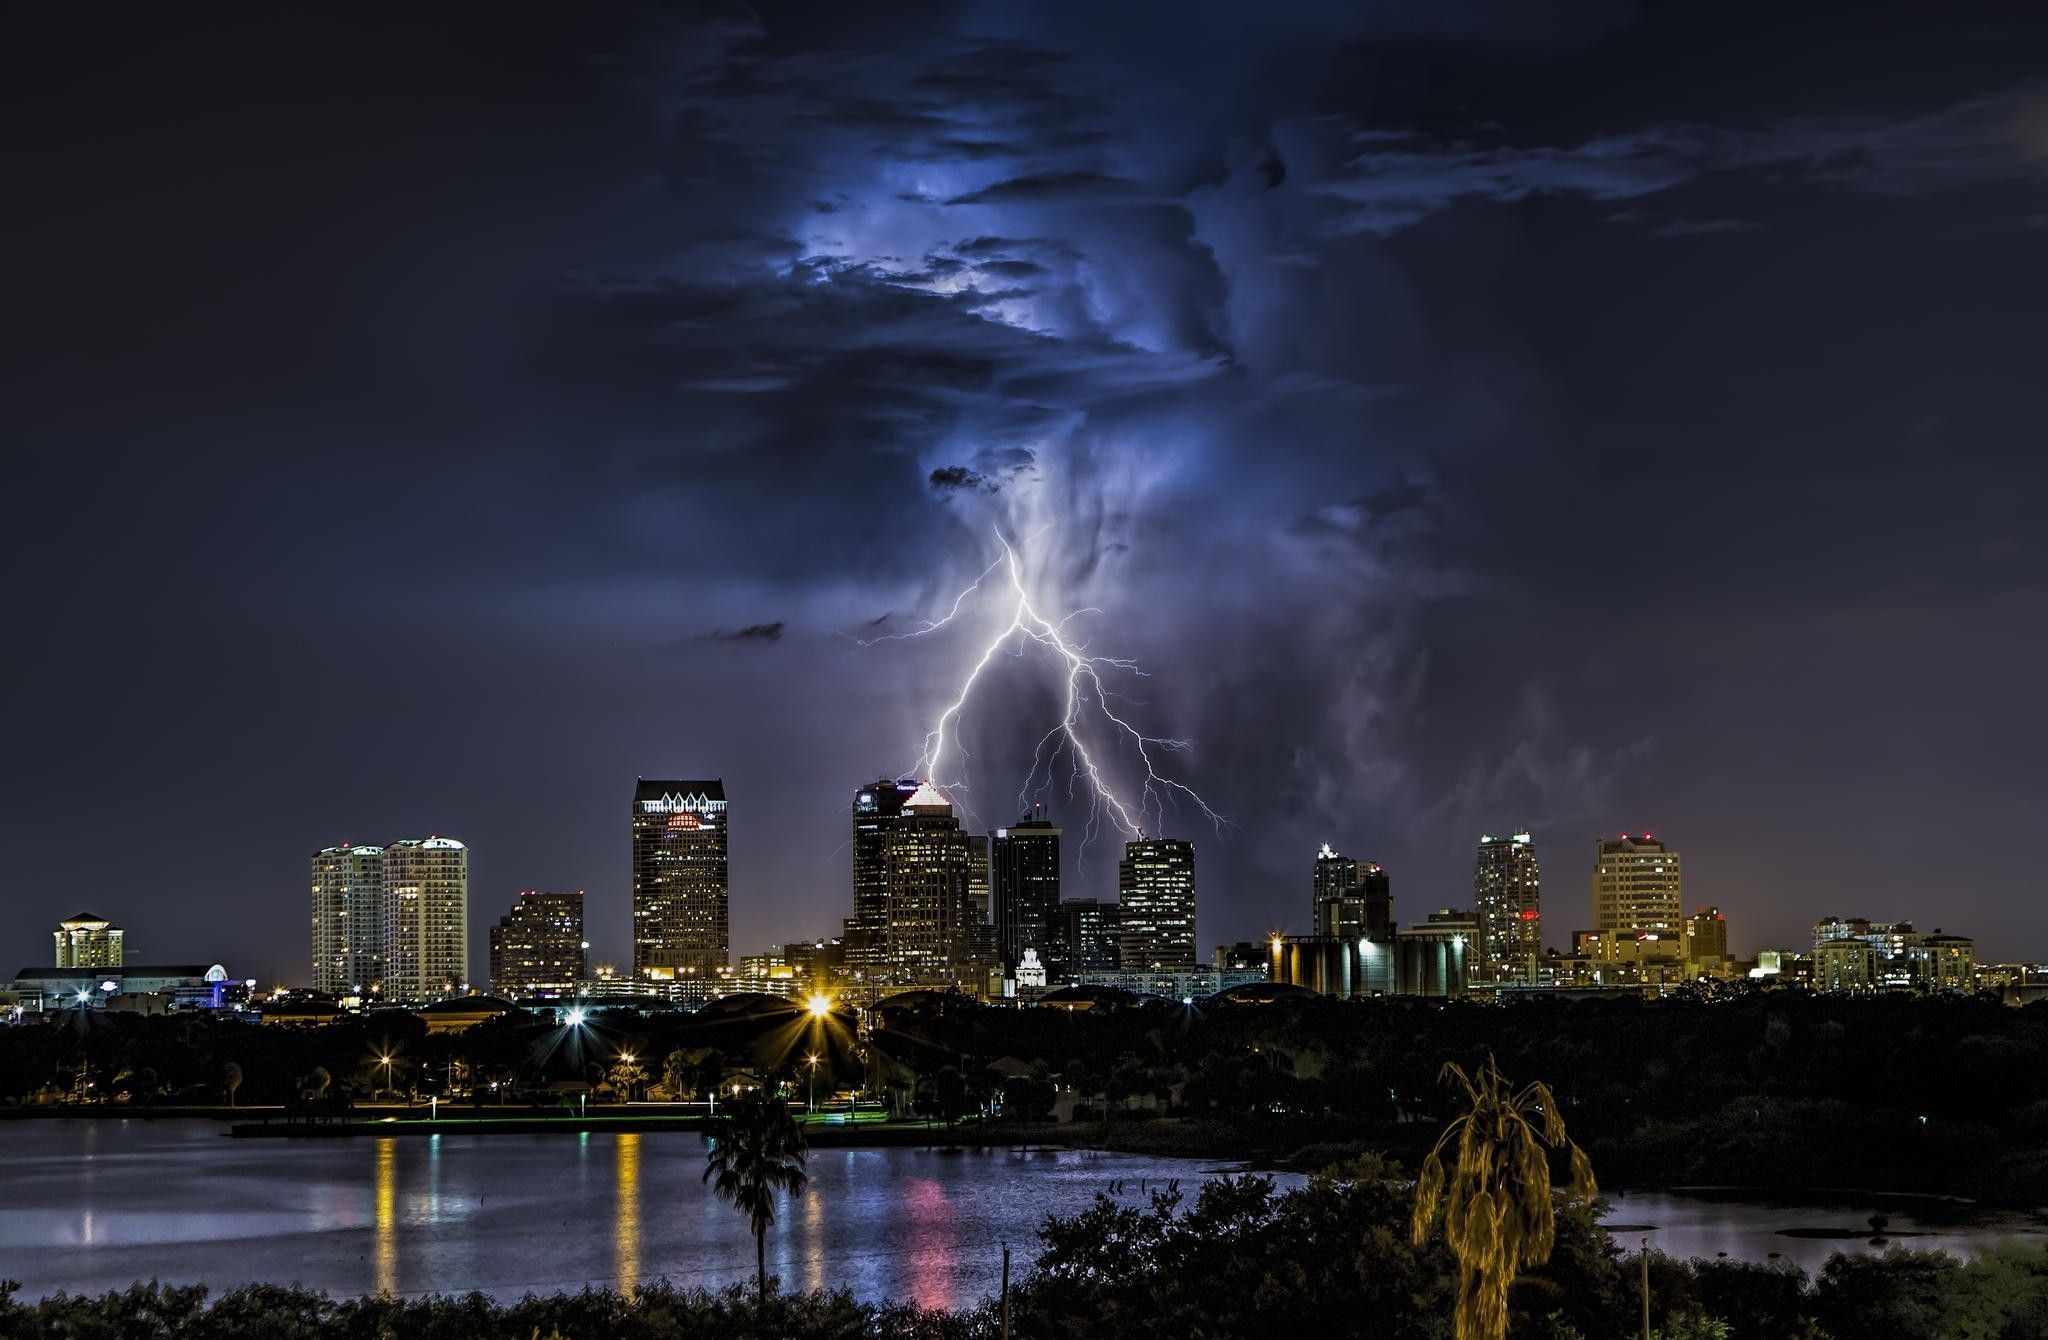 46+] Tampa Bay Lightning iPhone Wallpaper - WallpaperSafari